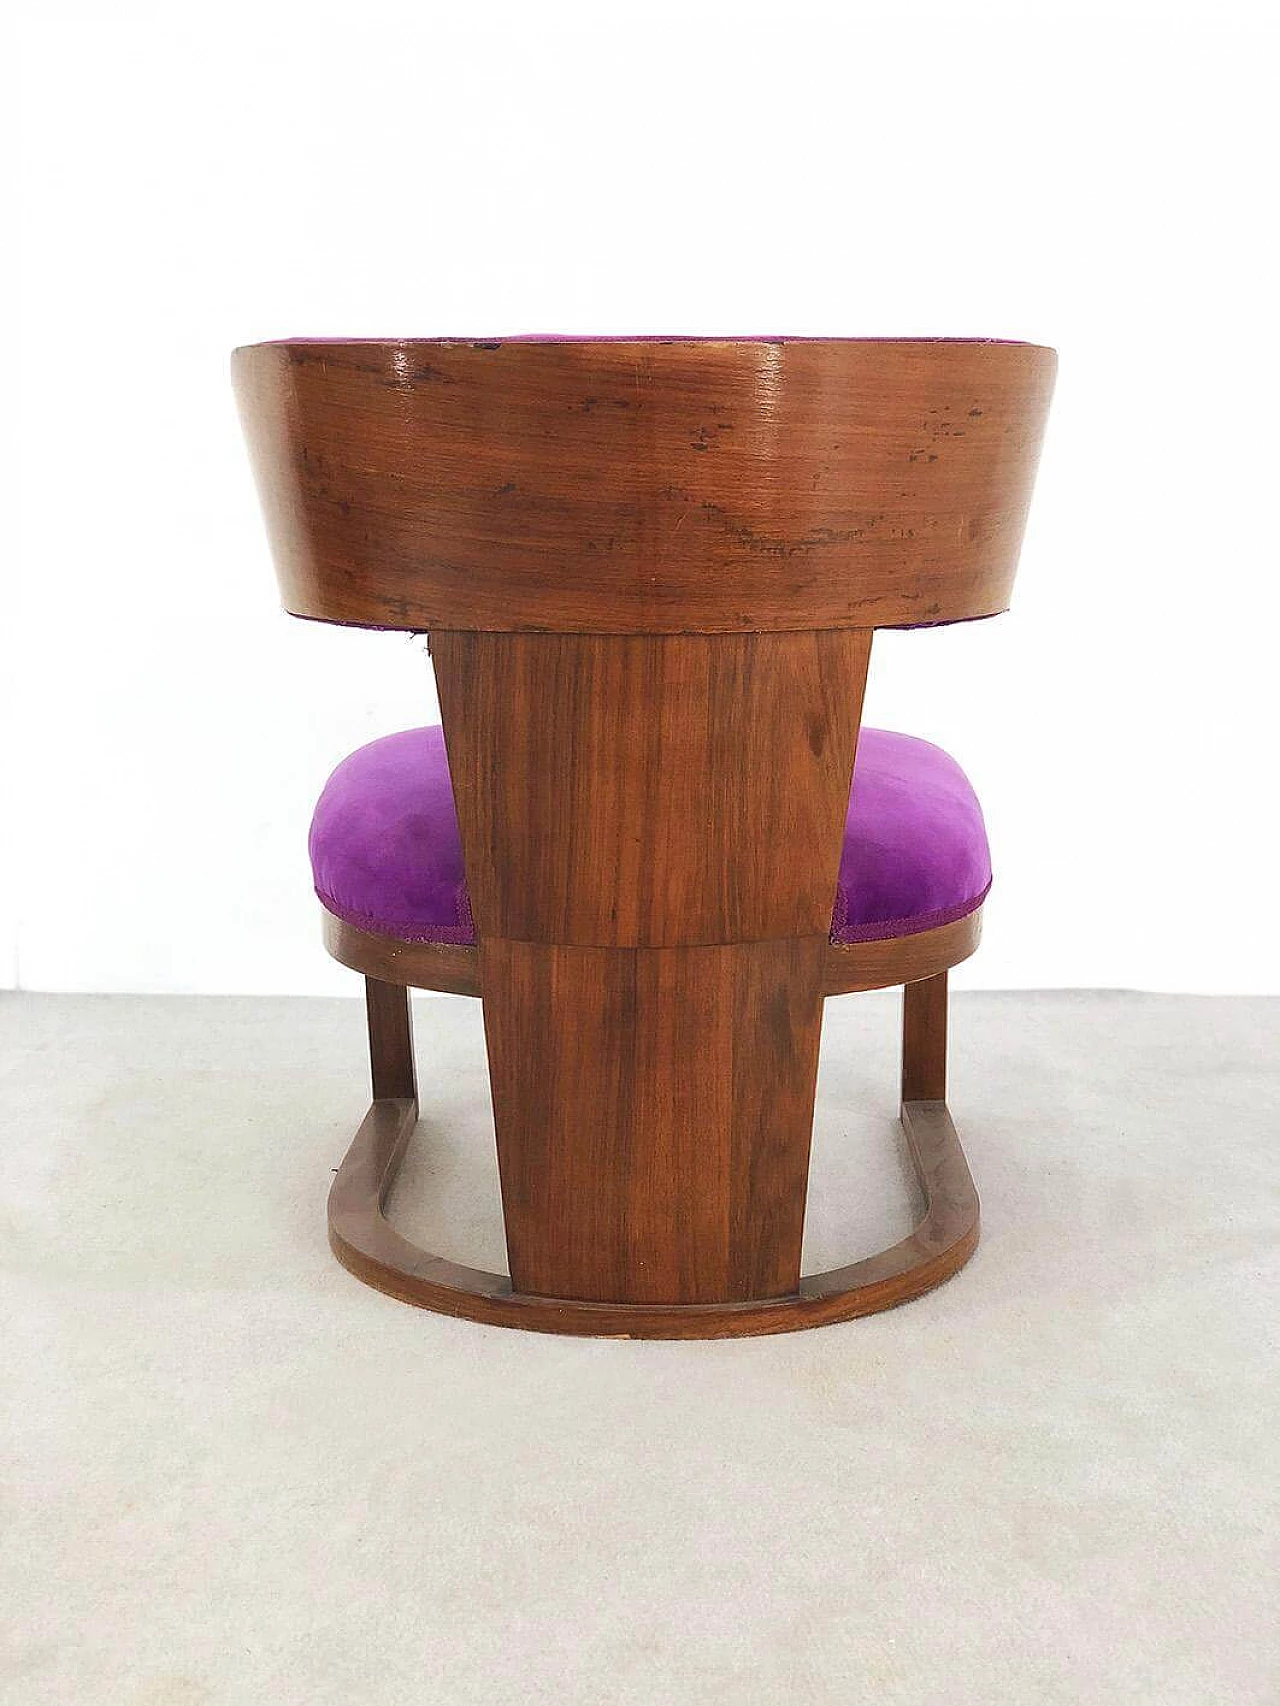 Ernesto Lapadula's armchair in wood and purple velvet, 1930s 1466322